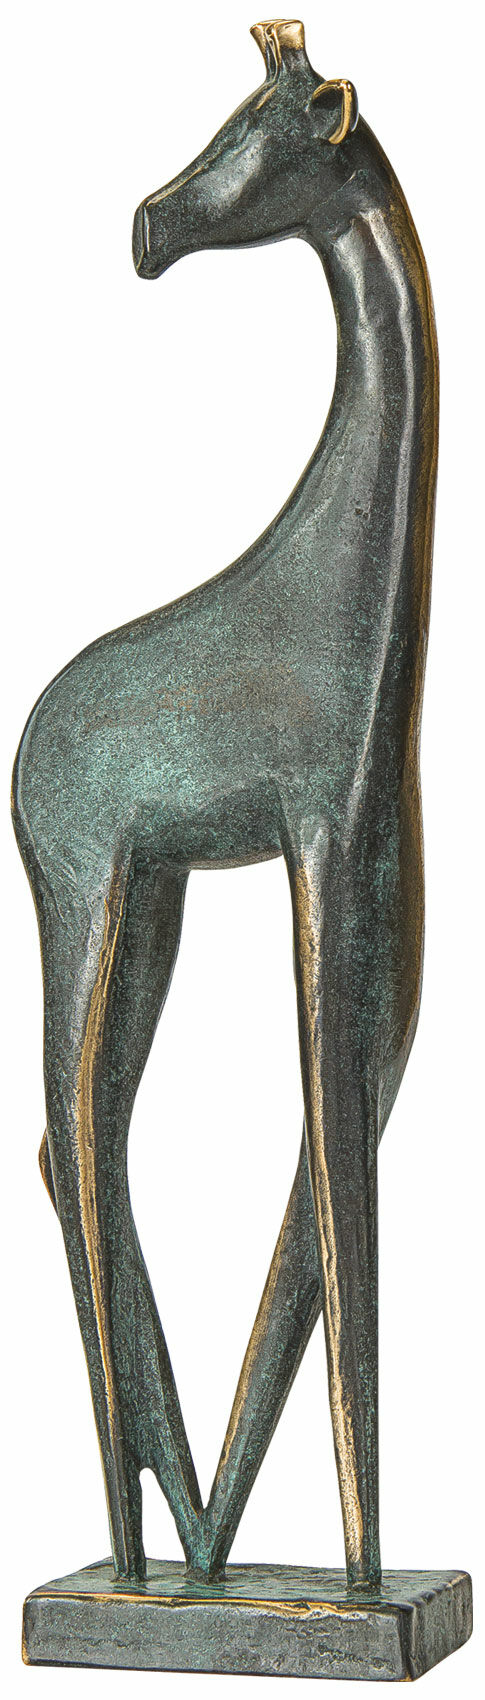 Sculpture "Giraffe", bronze by Raimund Schmelter